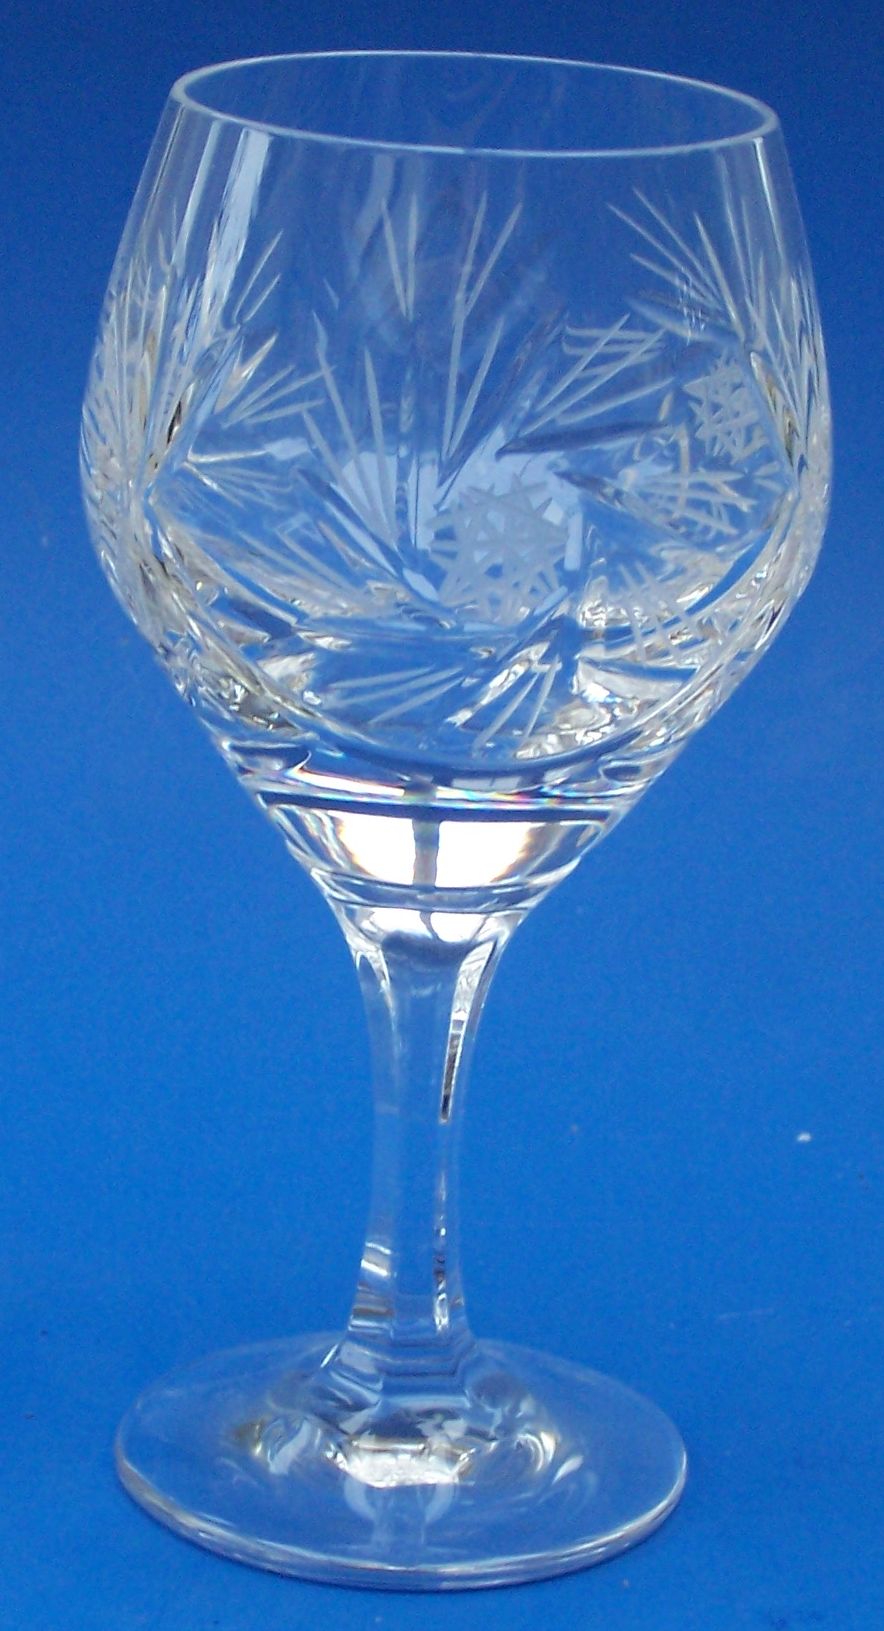 Bleikristall Gläser